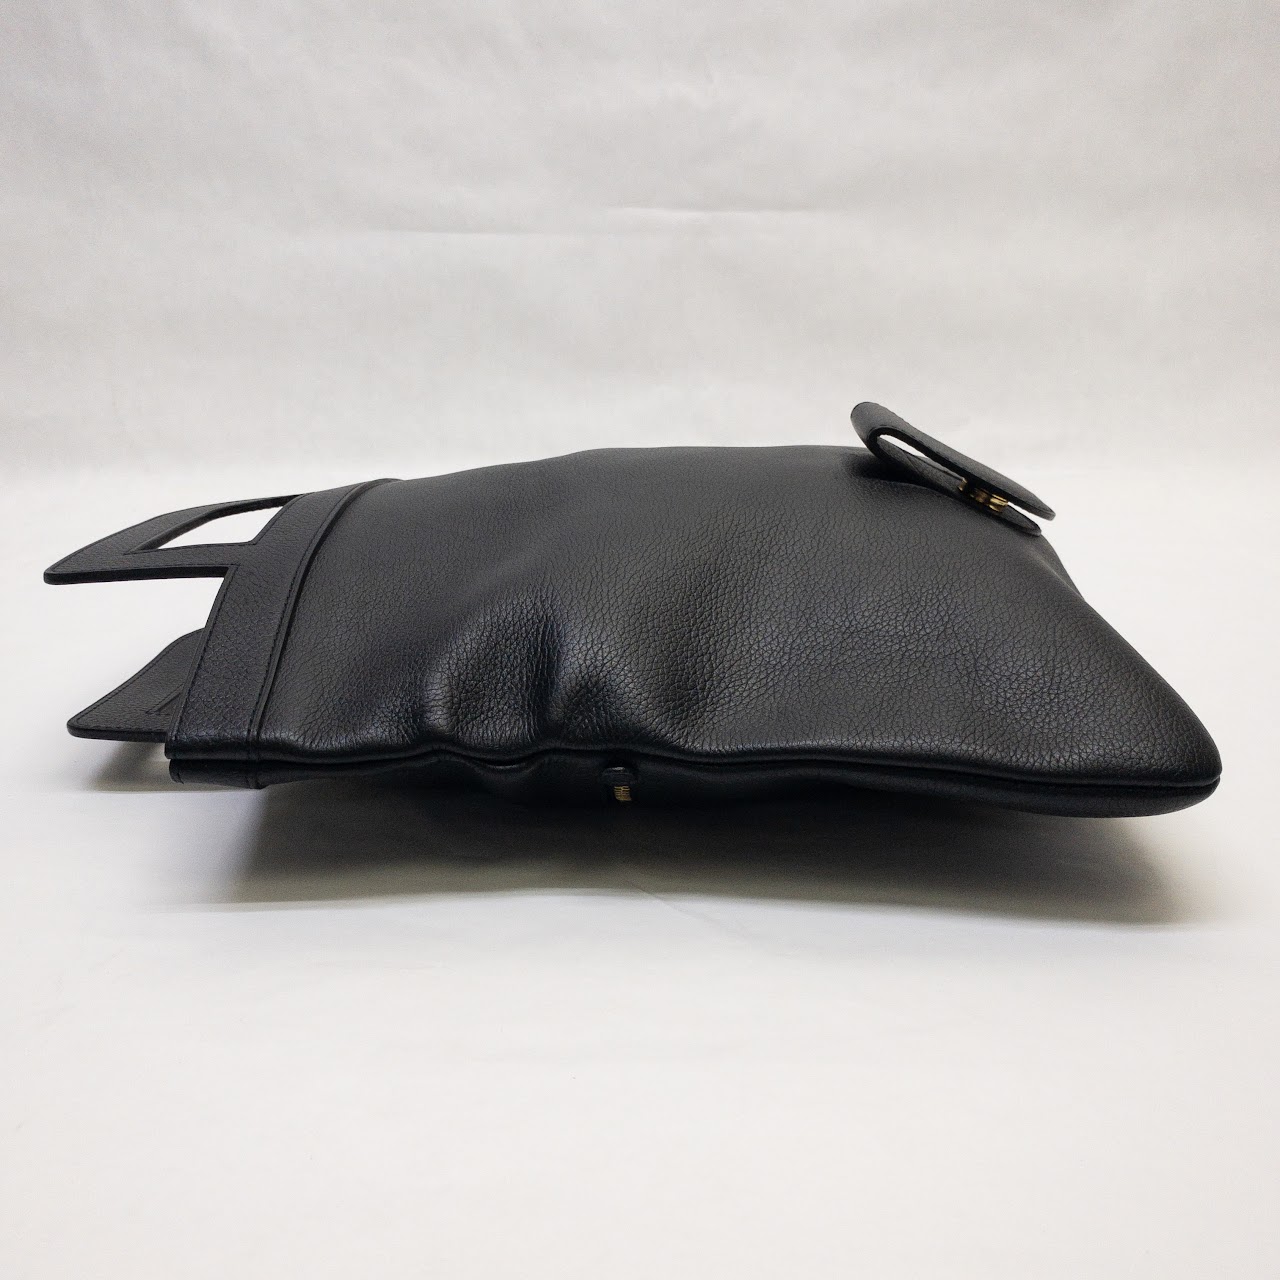 Delvaux Ancre Convertible Handbag/Clutch